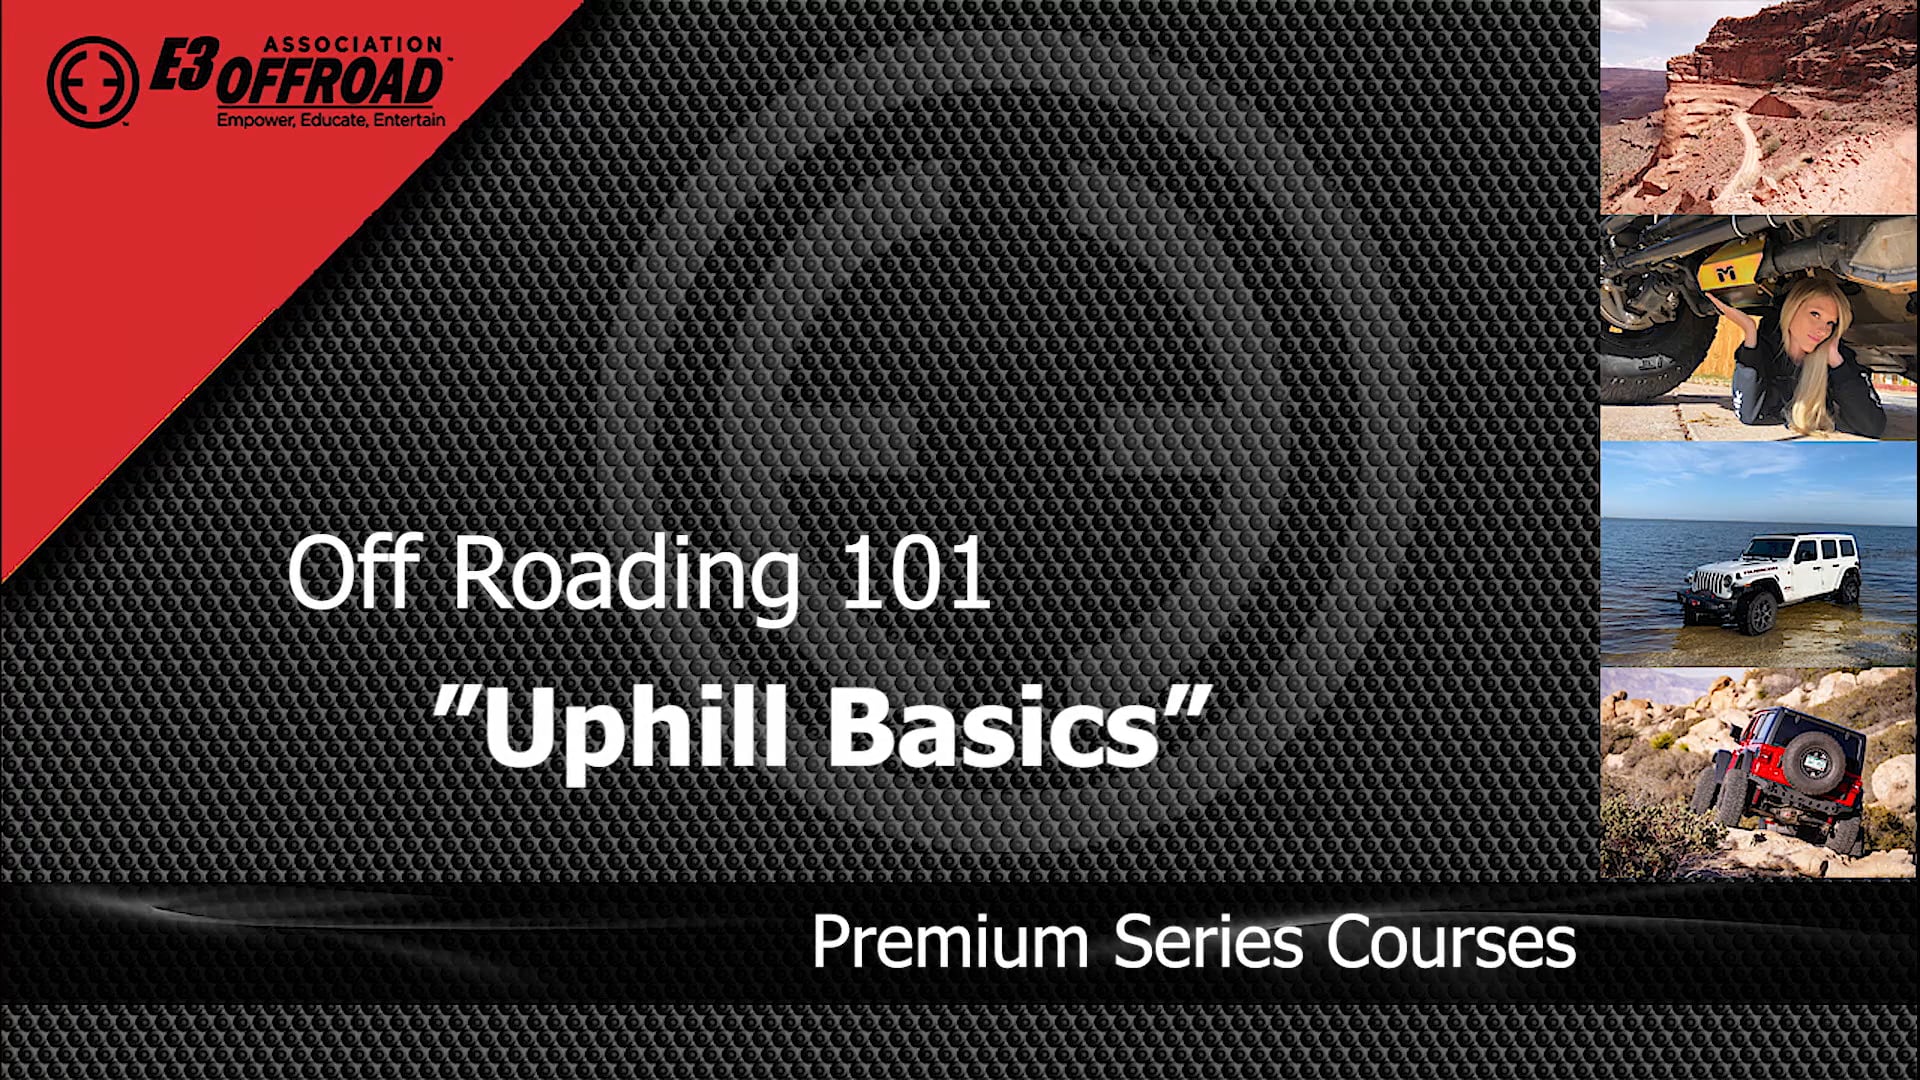 Off Roading 101 "Uphill Basics"